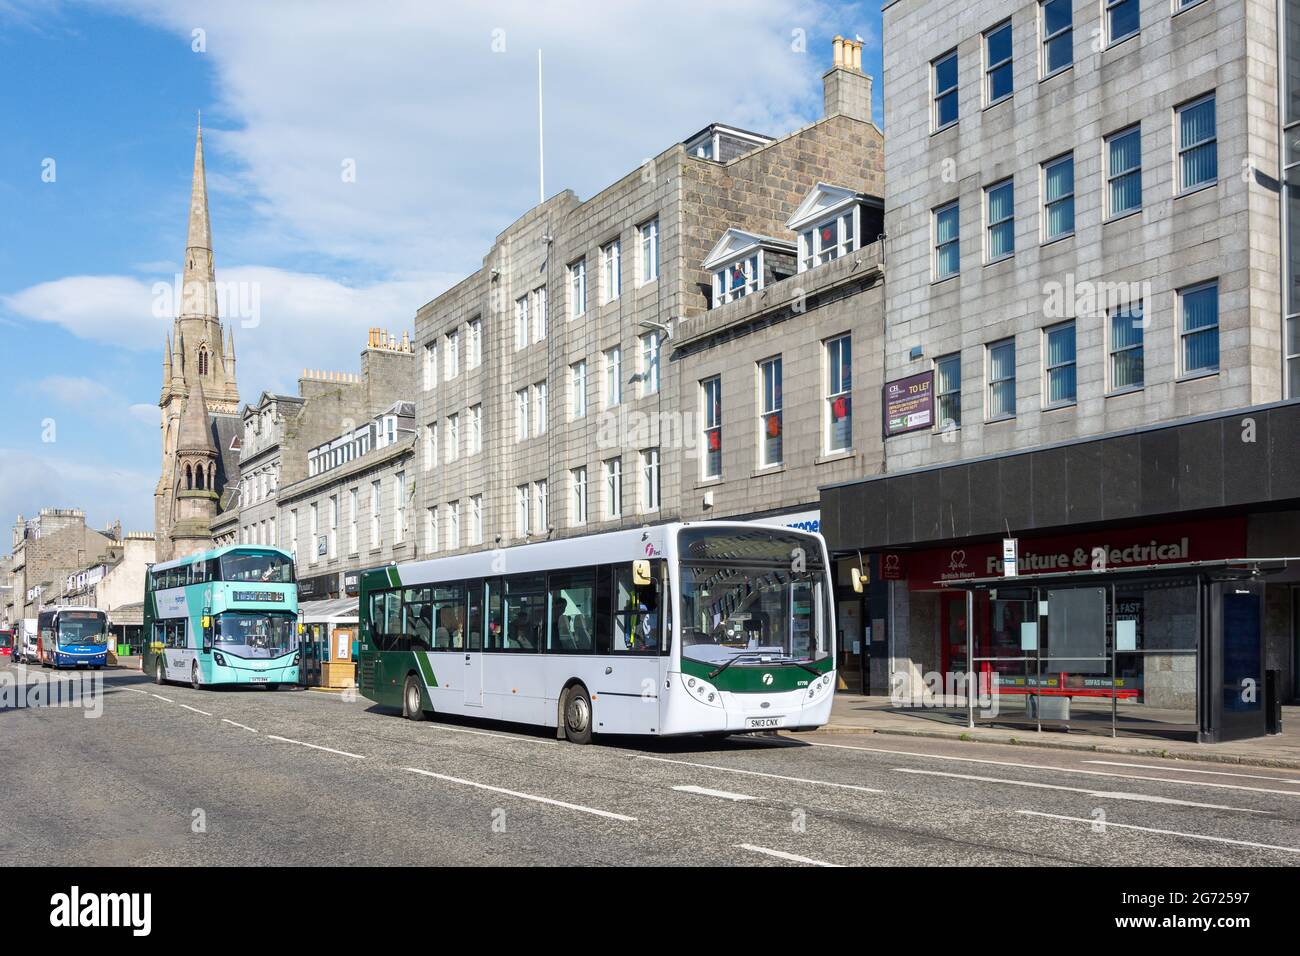 Local buses, Union Street, City of Aberdeen, Aberdeenshire, Scotland, United Kingdom Stock Photo